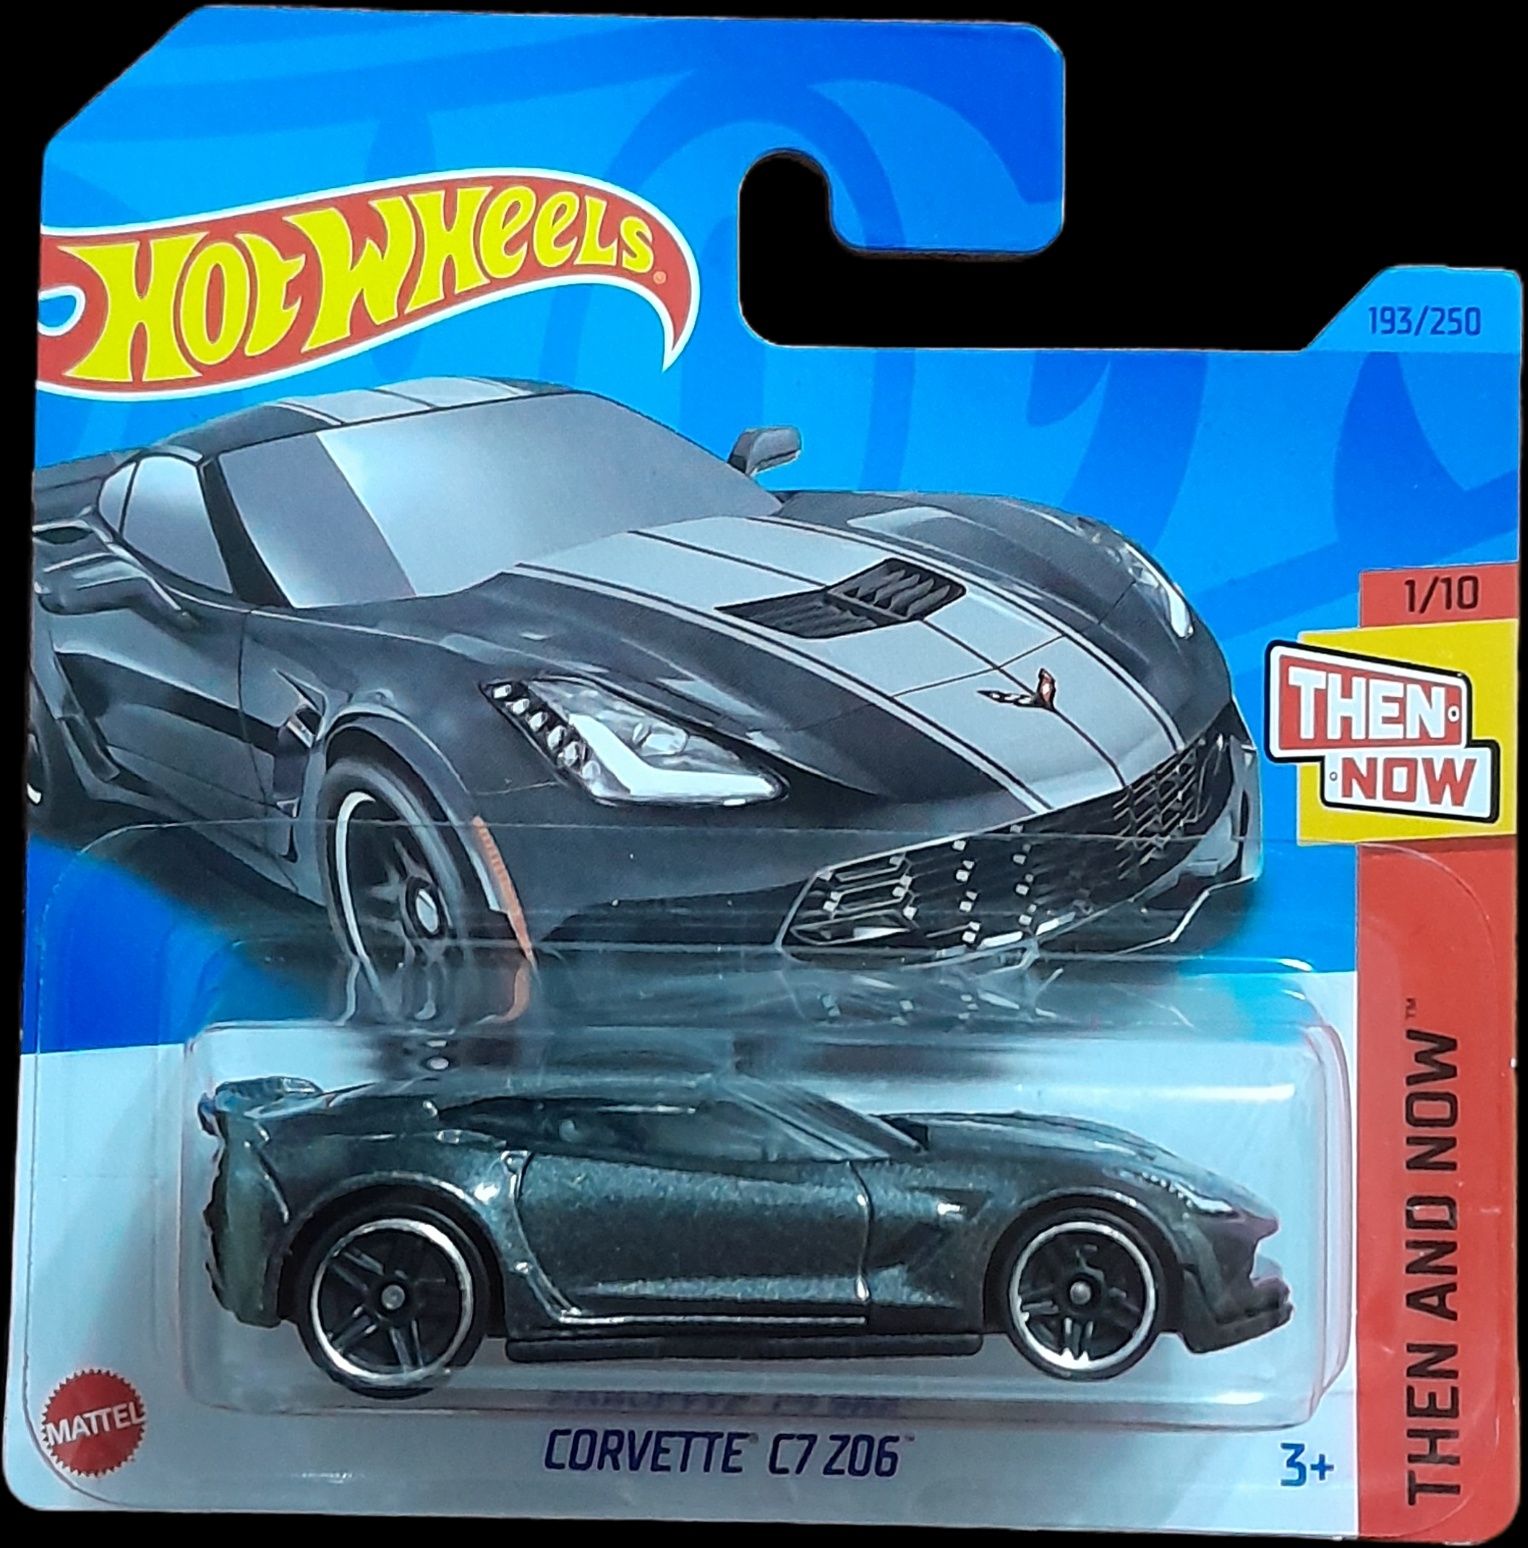 Corvette c7 hot wheels